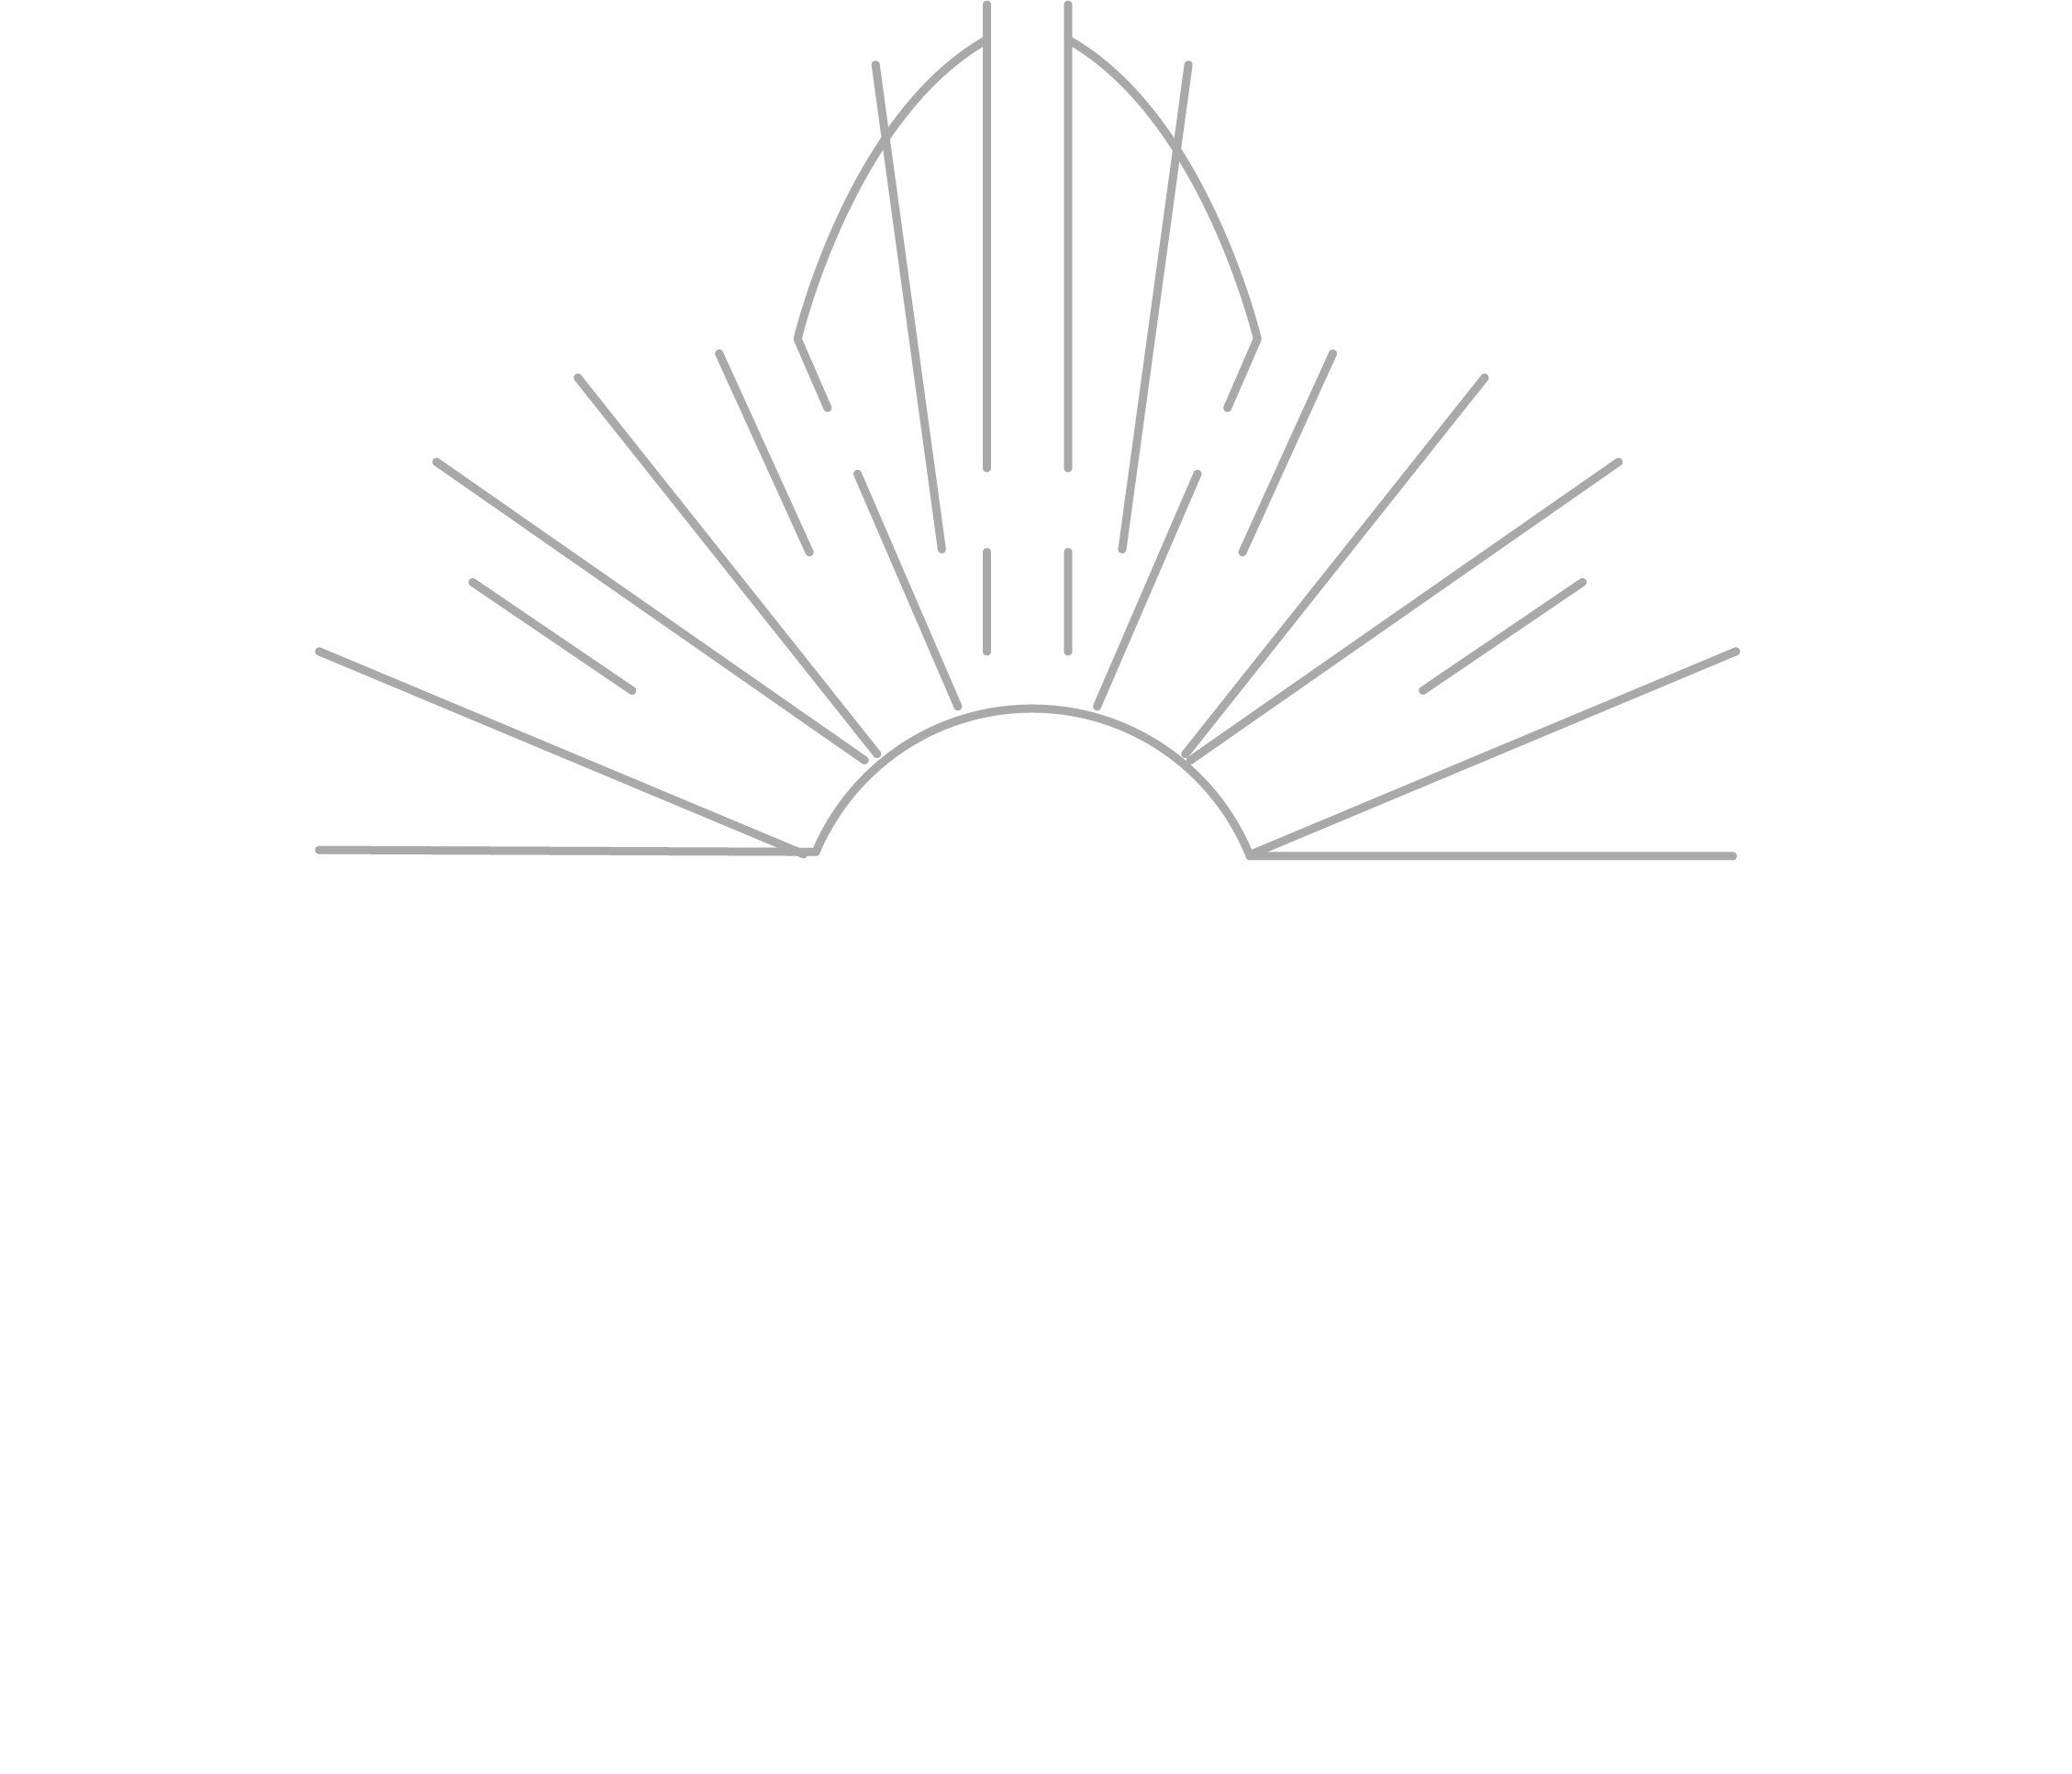 Aula Peruana